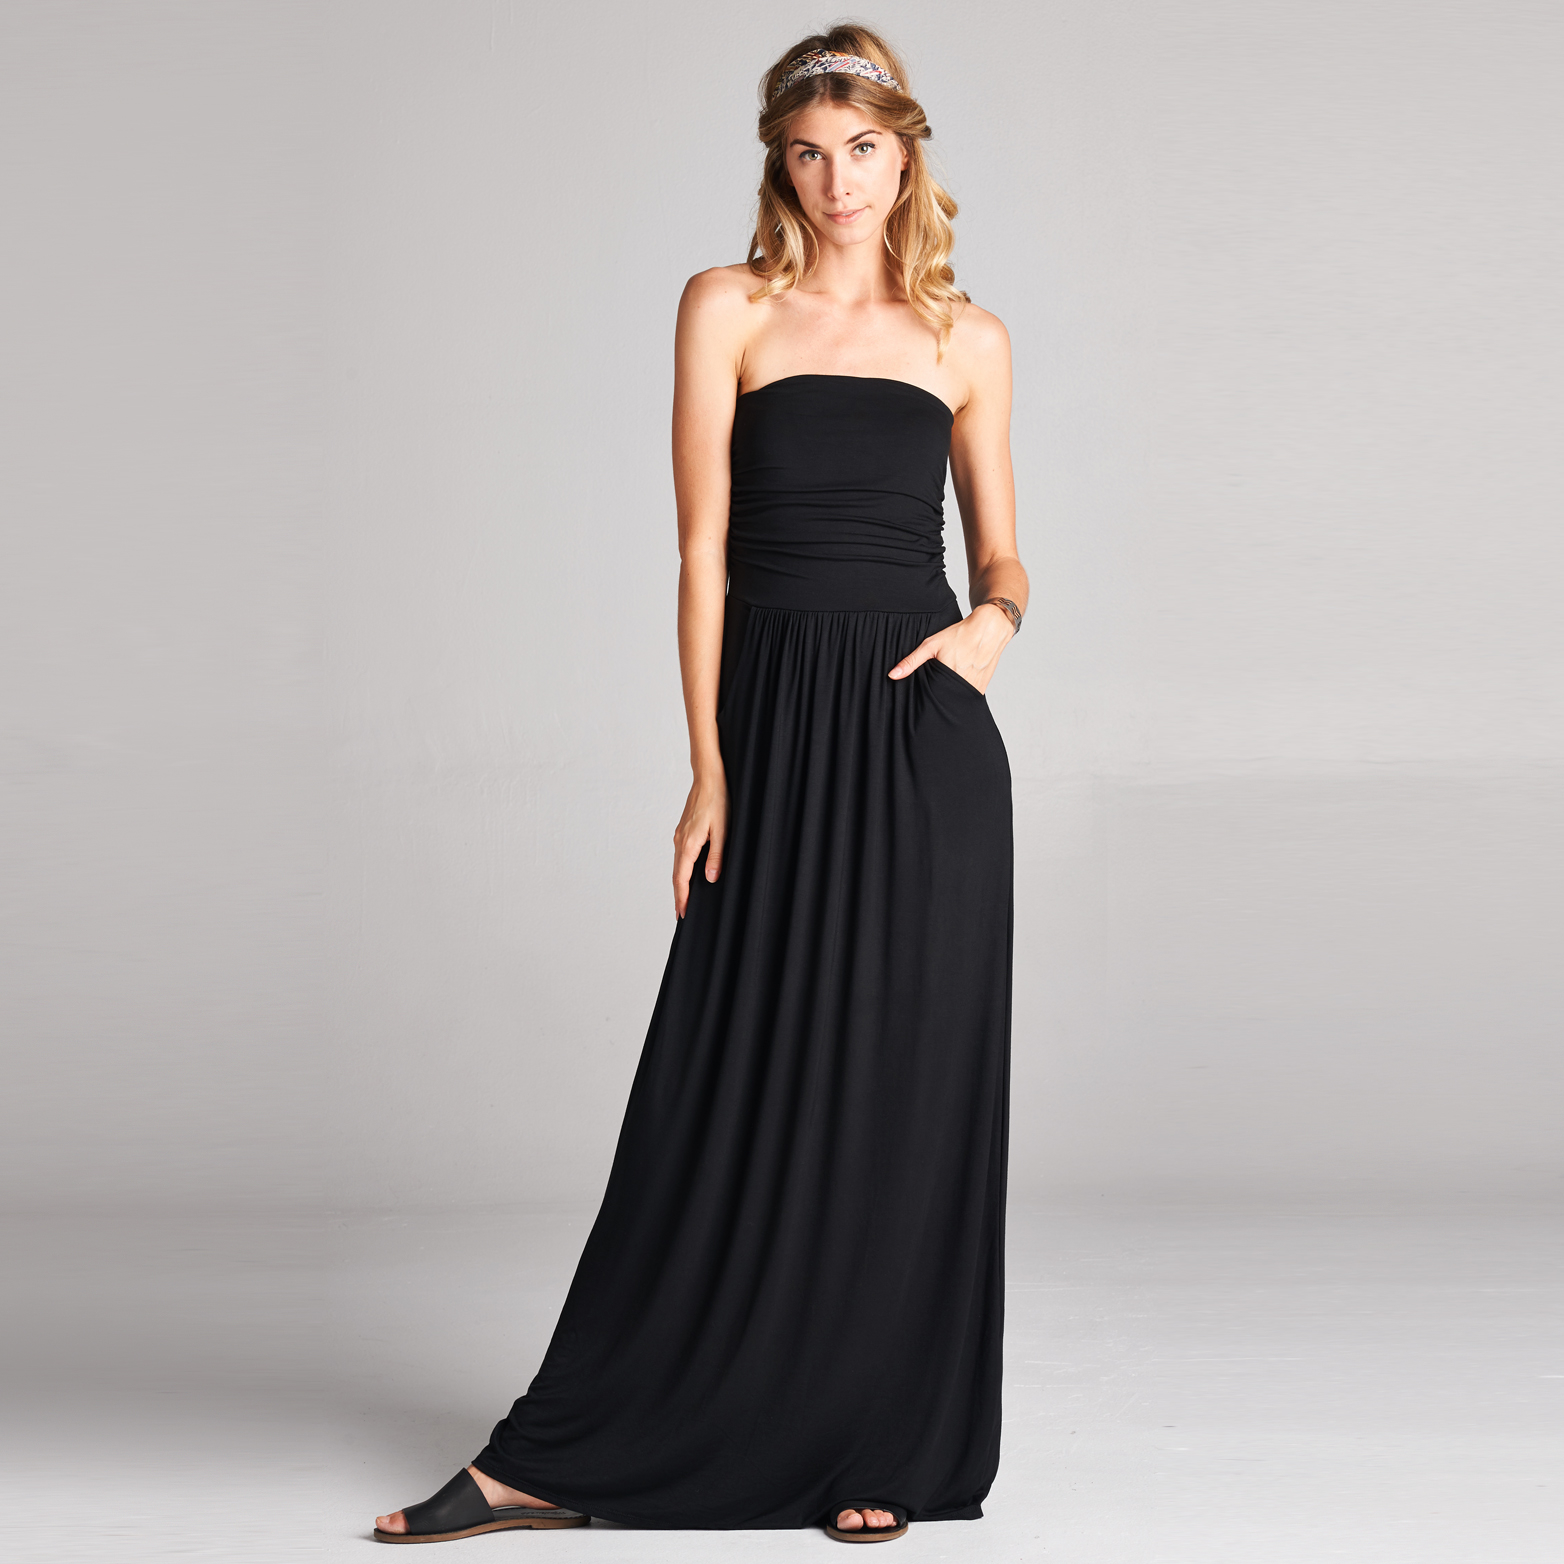 Atlantis Strapless Maxi Dress With Pockets In 6 Colors - Black, Medium (8-10)